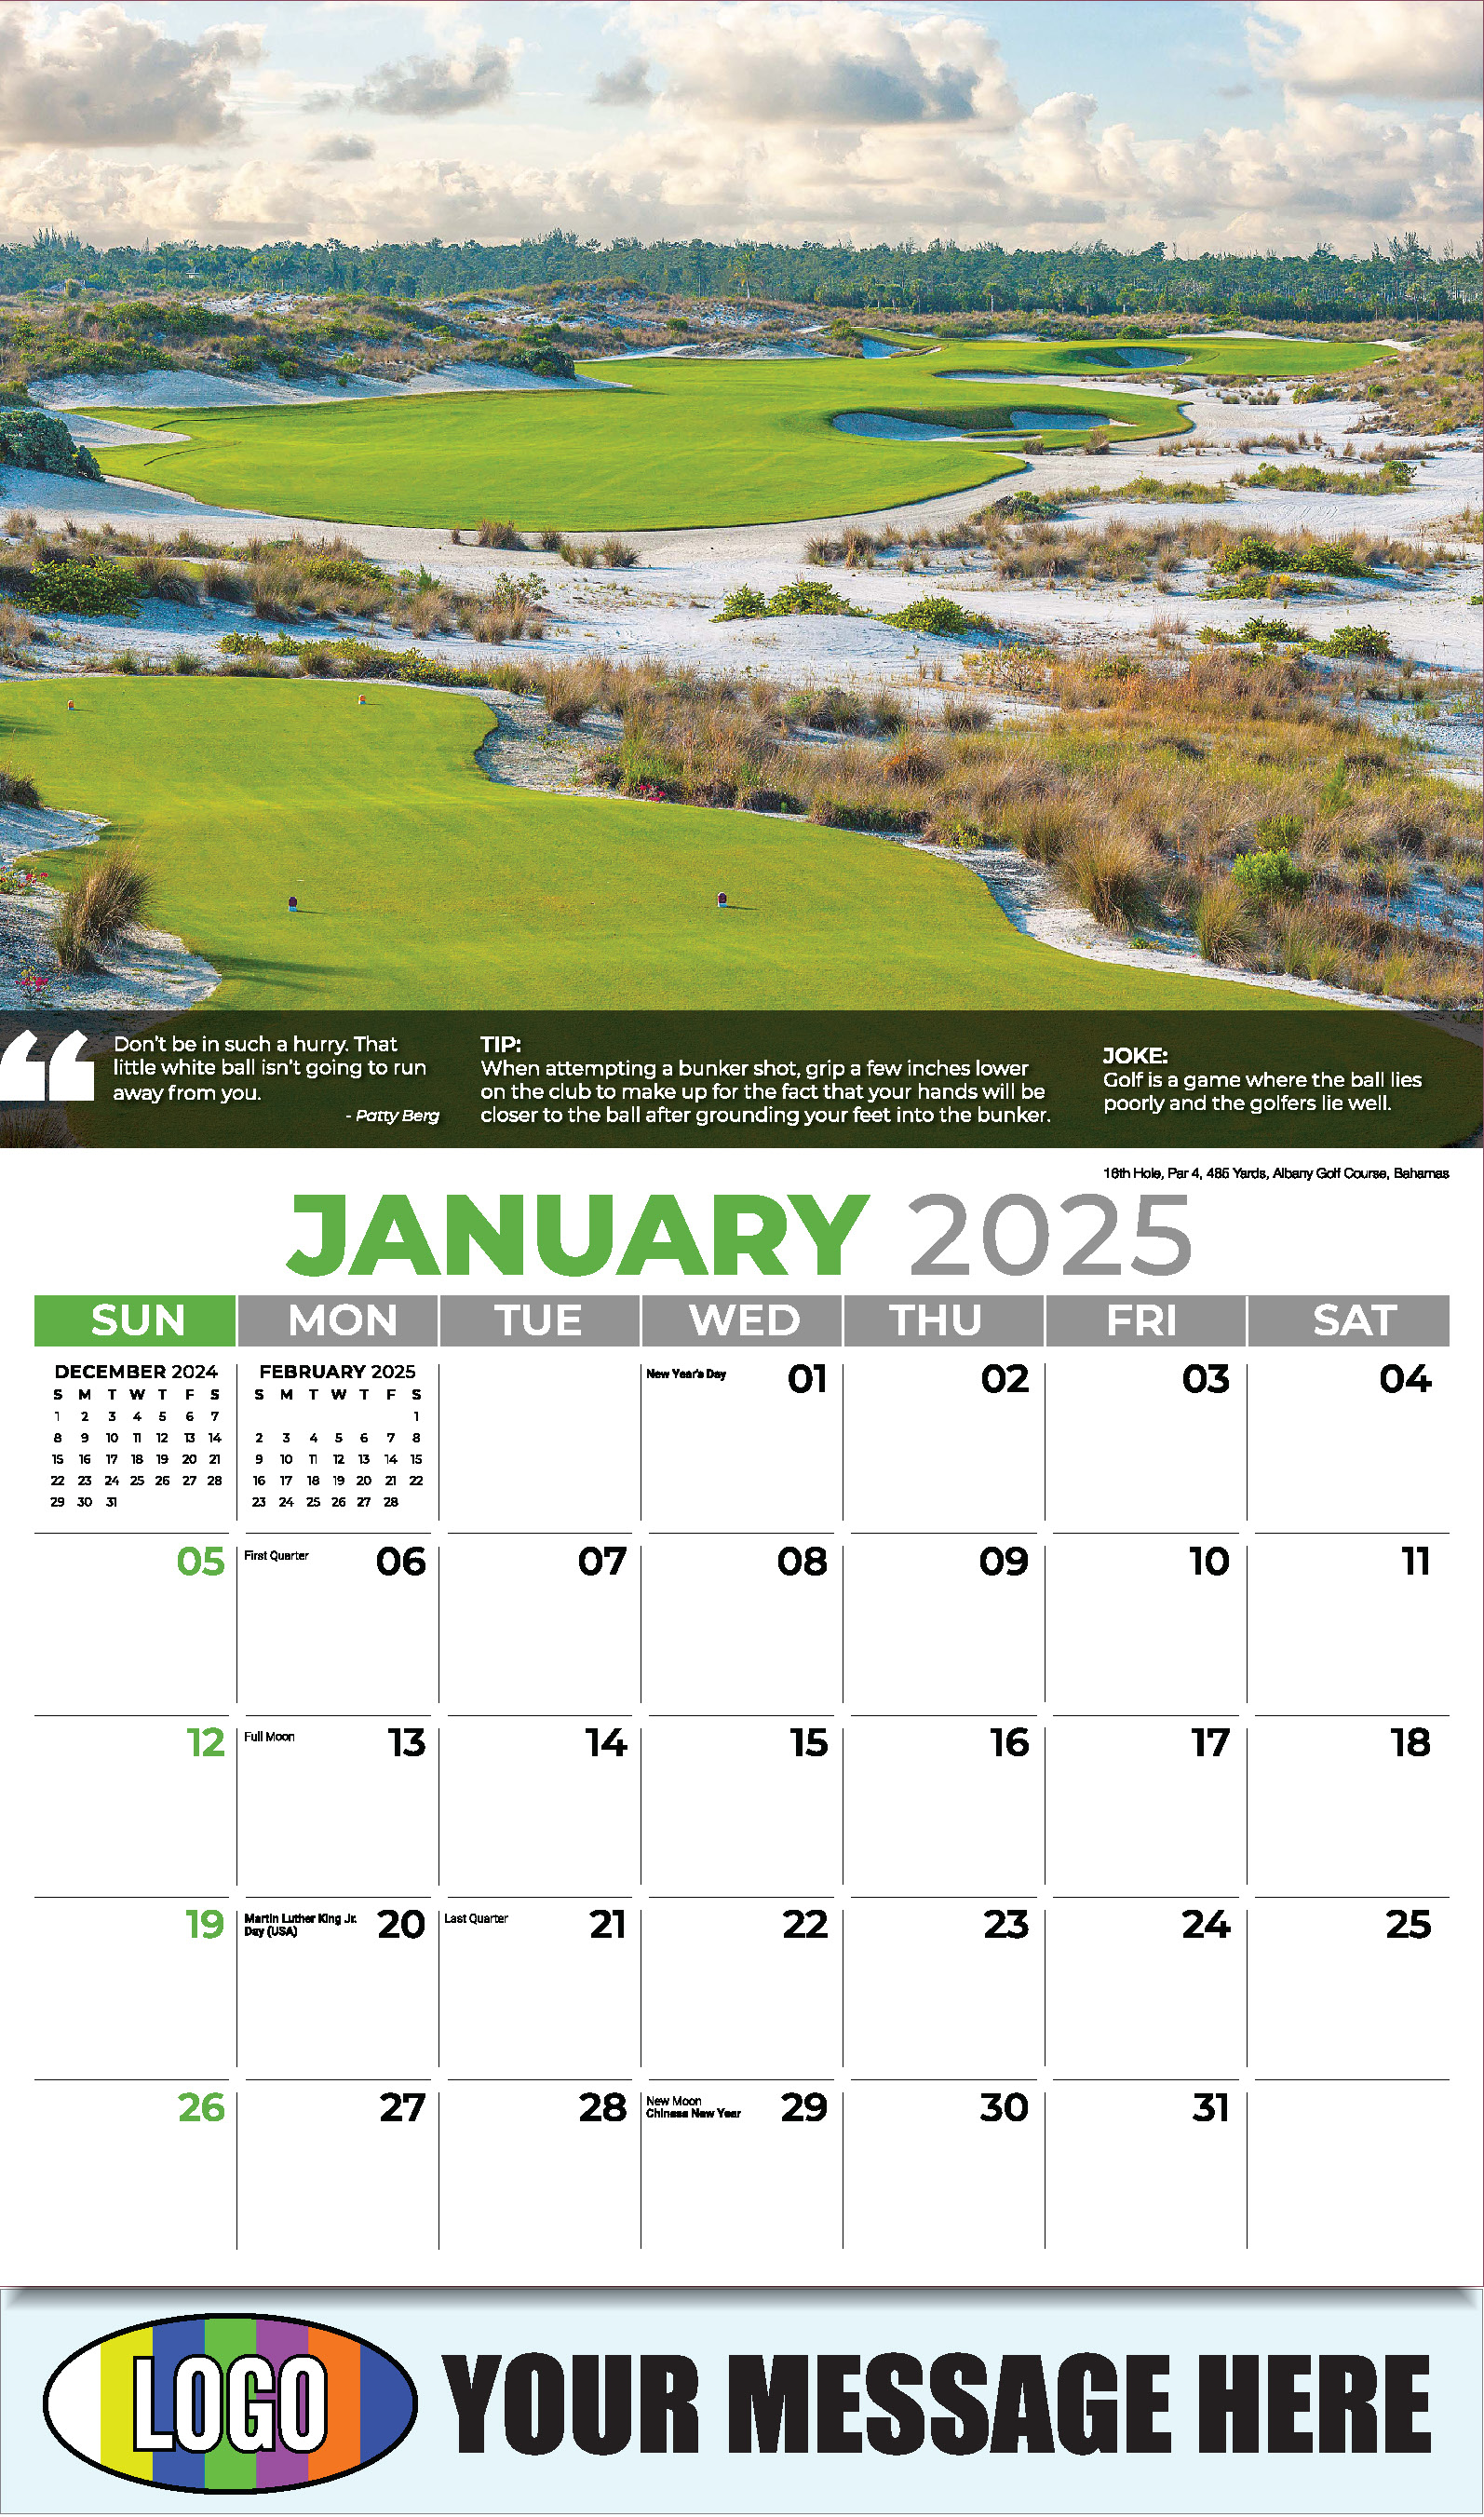 Golf Tips 2025 Business Promo Calendar - January